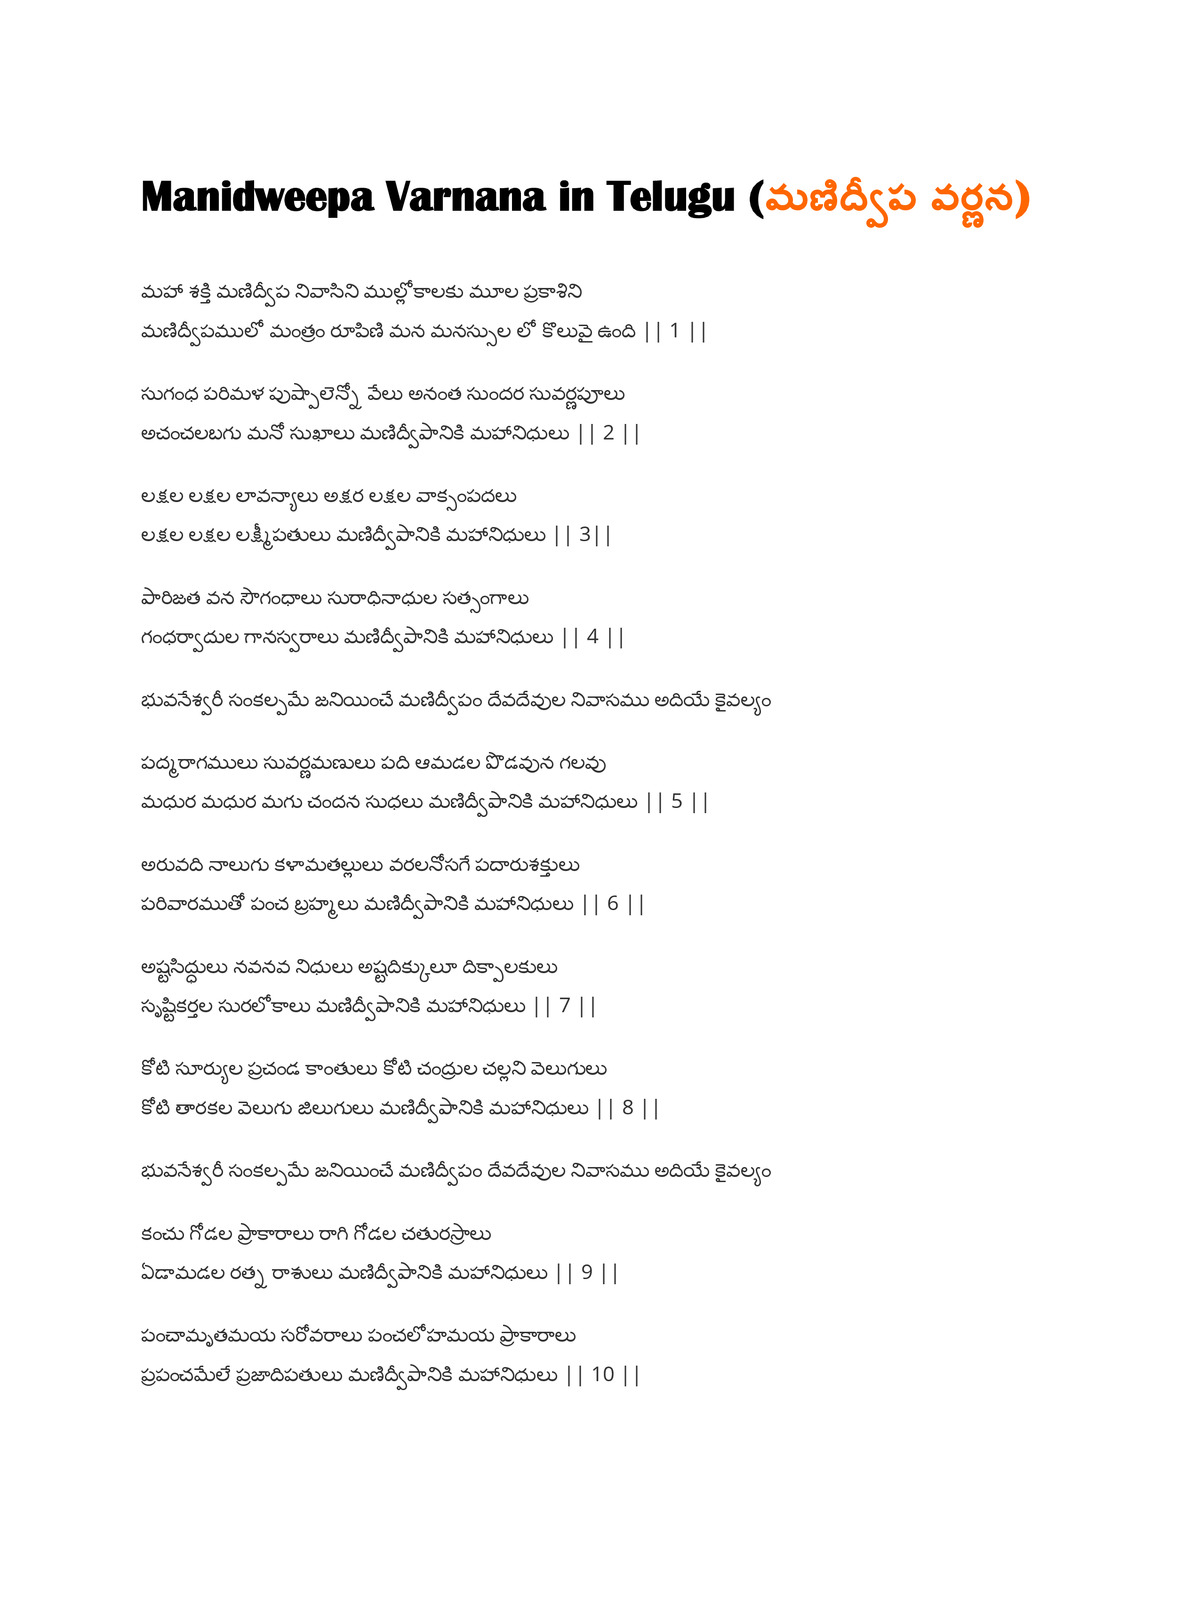 How to Downlaod a PDF of Manidweepa Varnana in the Telugu Language?